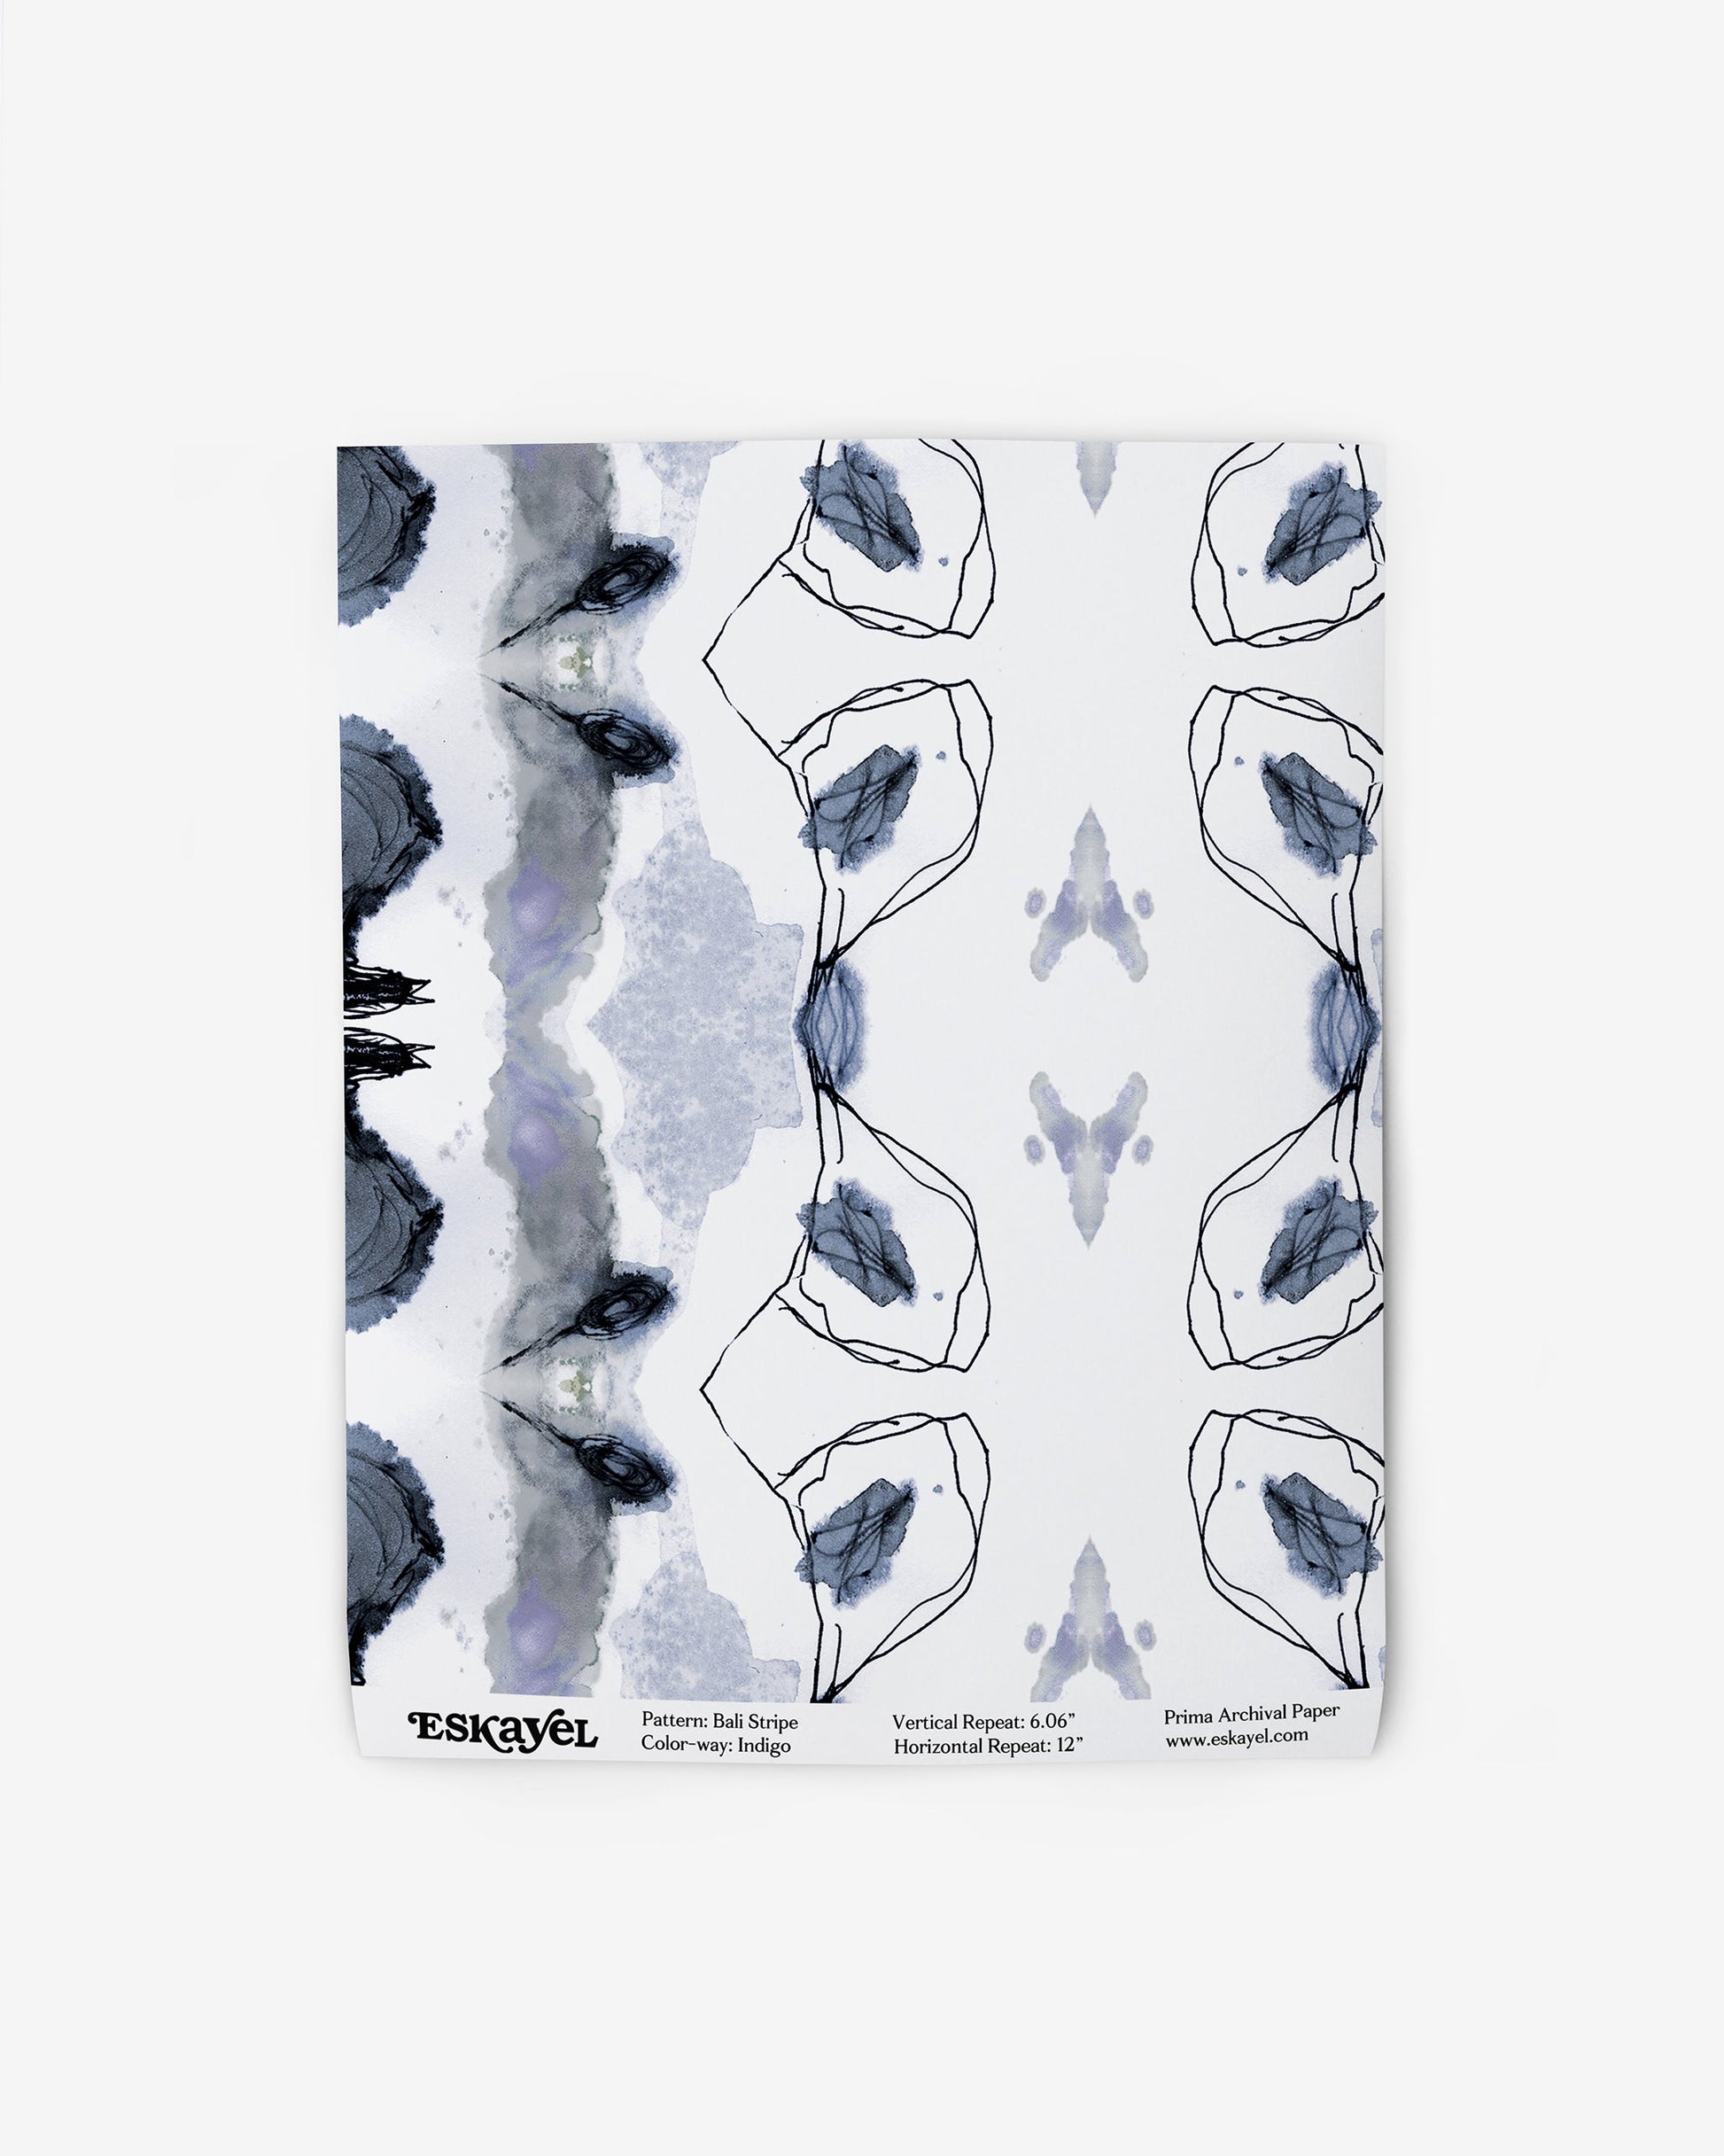 A Bali Stripe Wallpaper Sample||Indigo handkerchief with flowers on it.